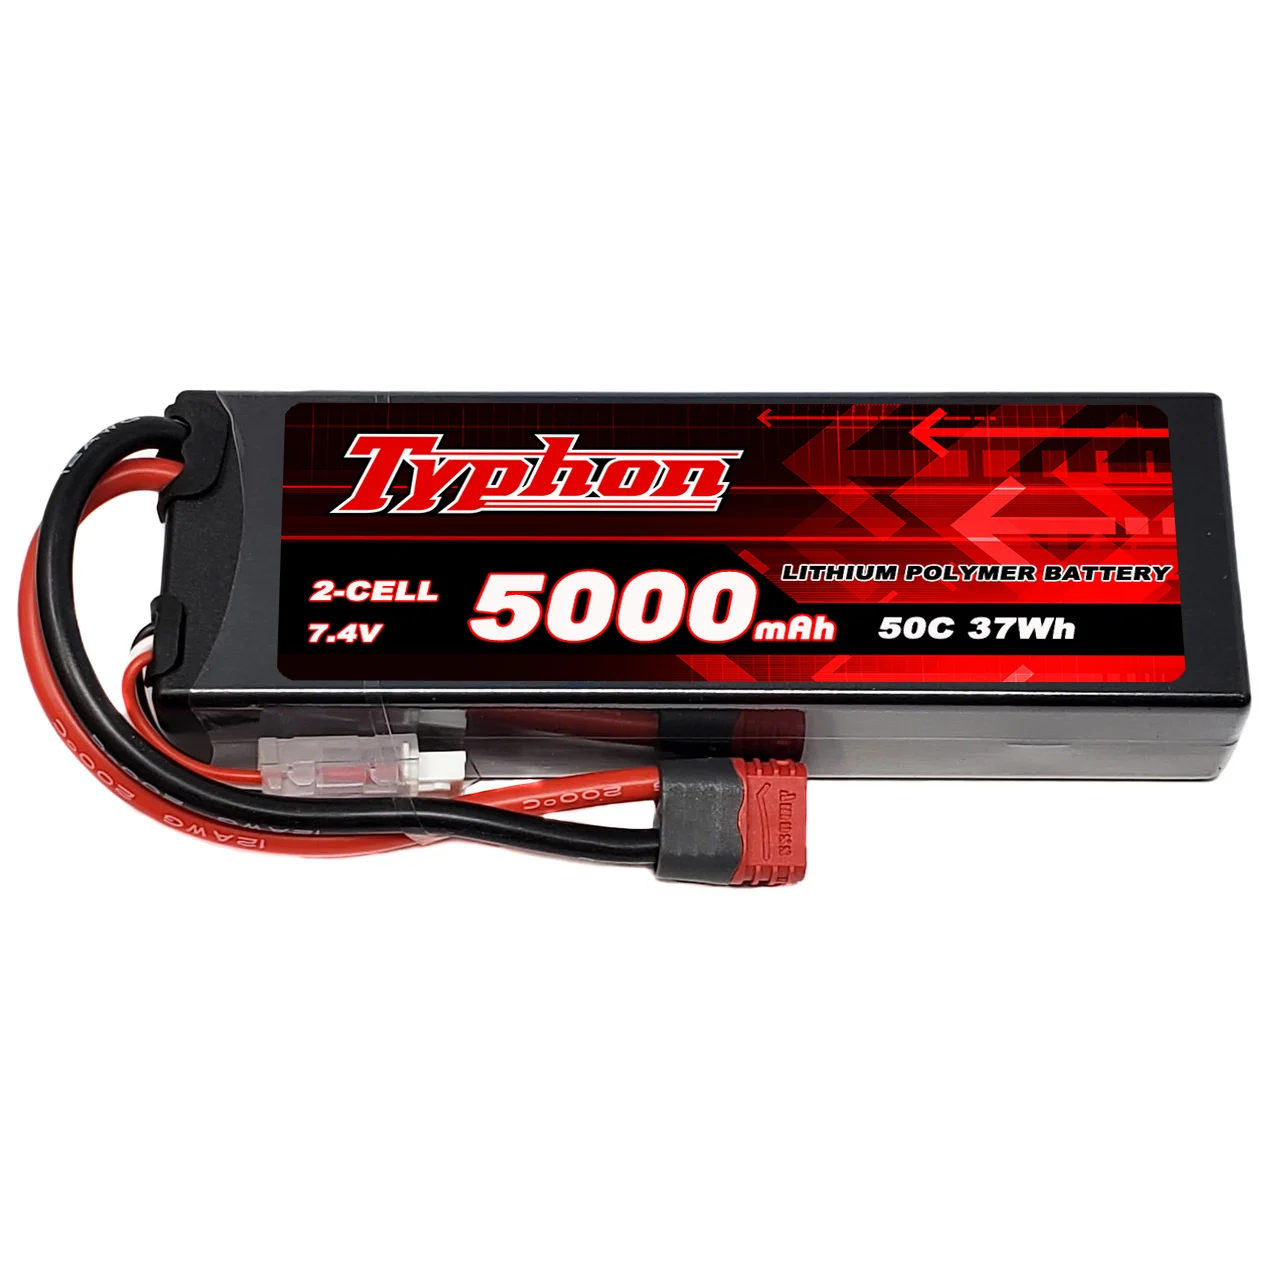 Manufacturer of custom 7.4V-2S lithium polymer battery pack